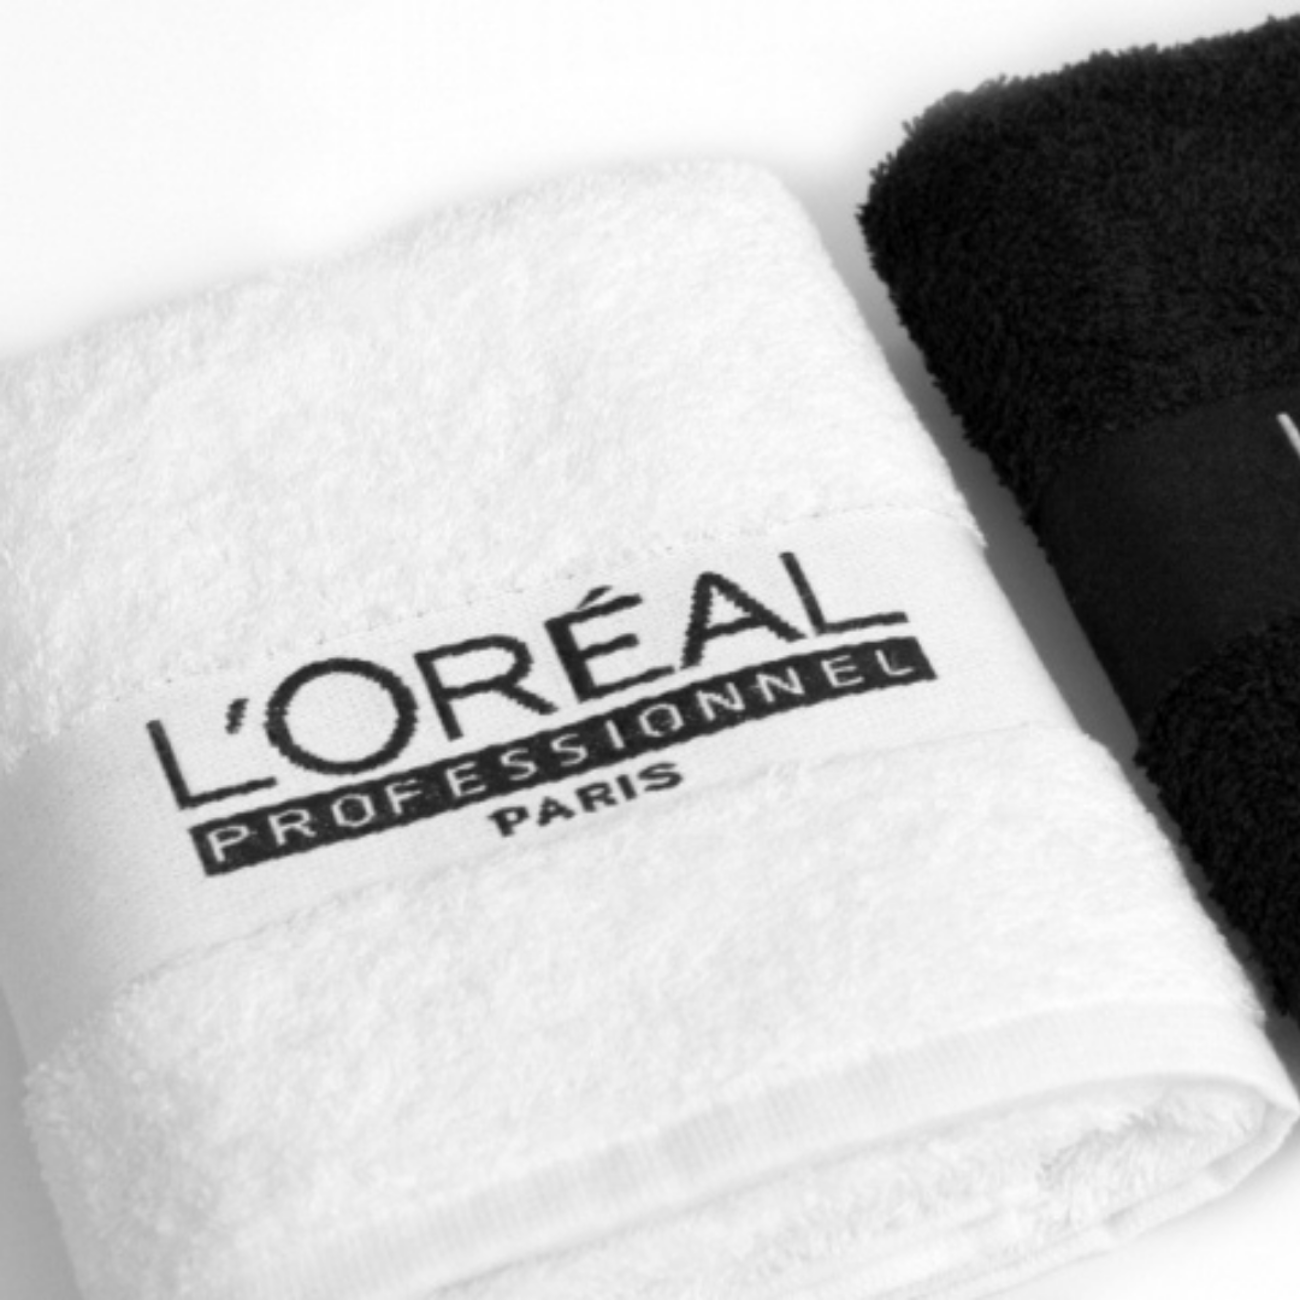 Черно белые полотенца. Полотенце. Полотенце с логотипом. Вышивка логотипа на полотенце. Махровое полотенце с логотипом.